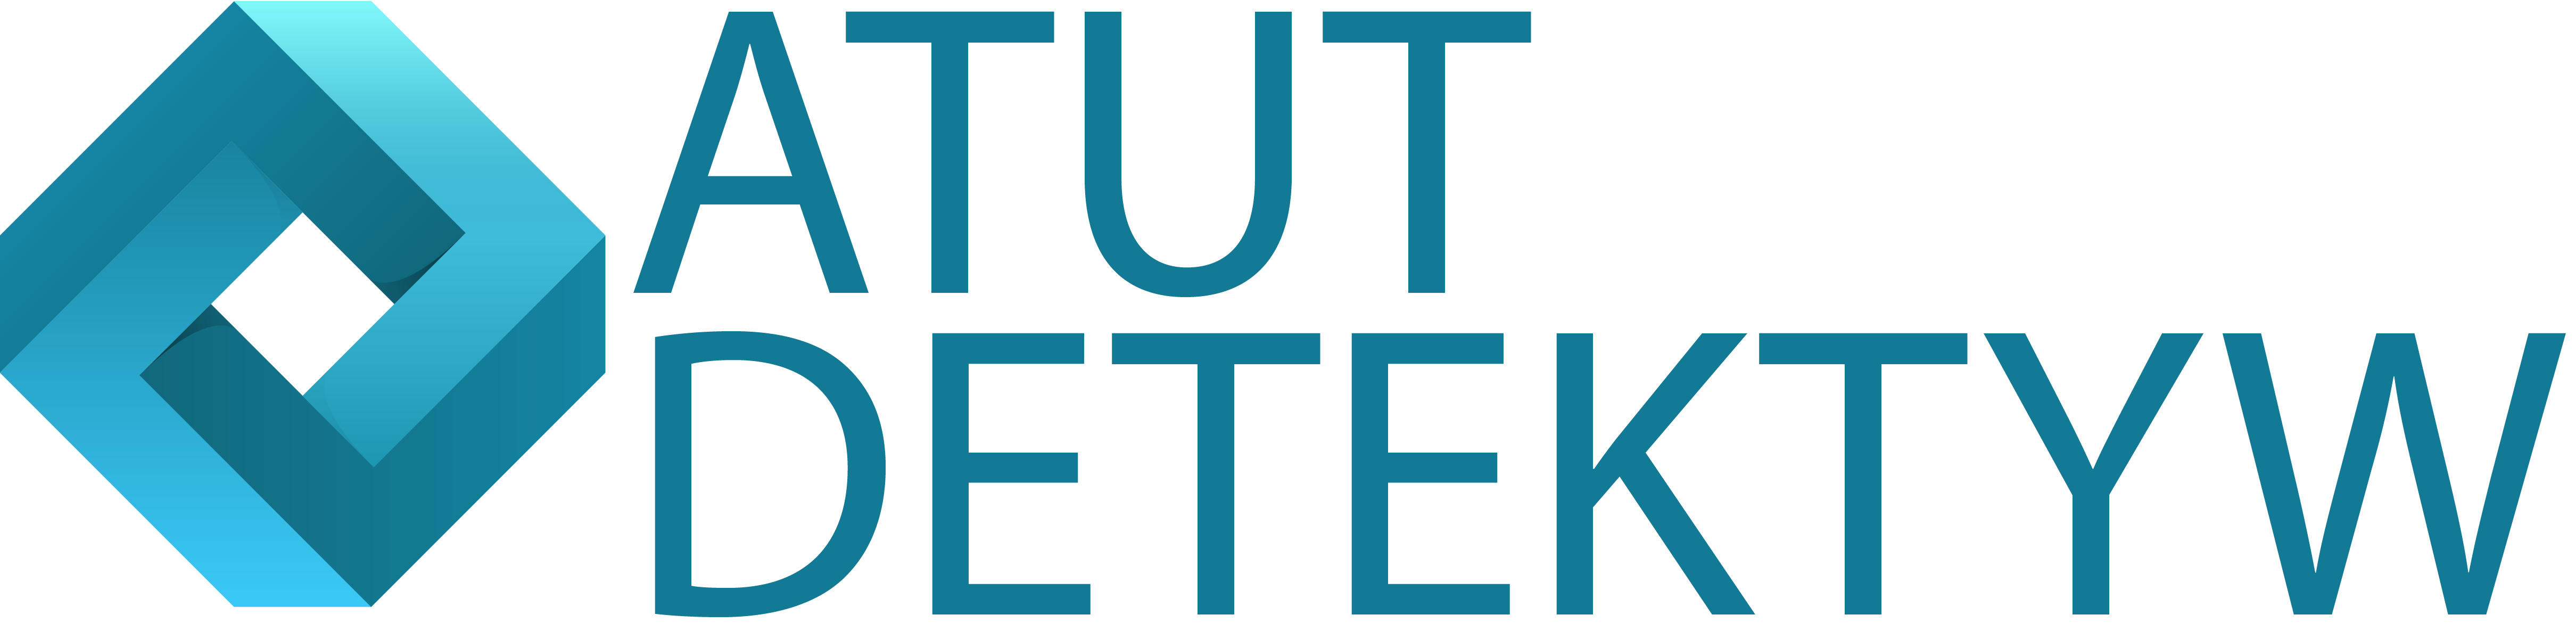 Logo atutdetektyw.pl